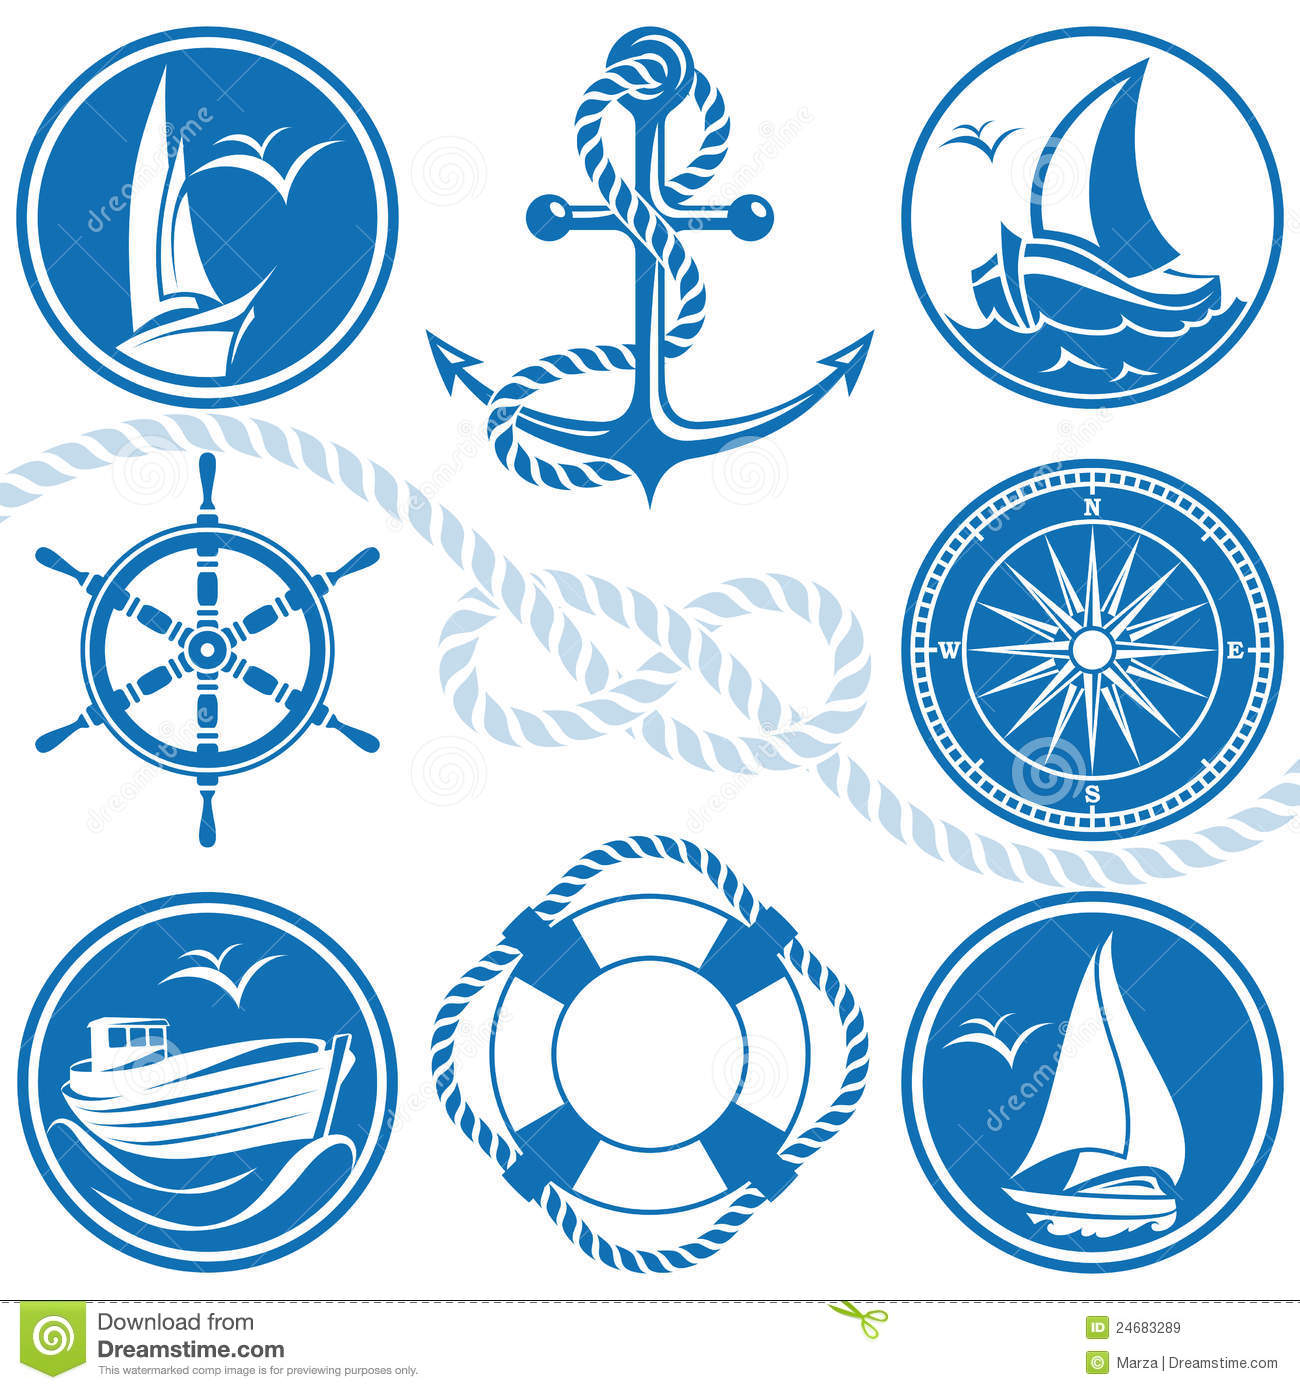 Nautical Symbols And Icons Royalty Free Stock Images   Image  24683289